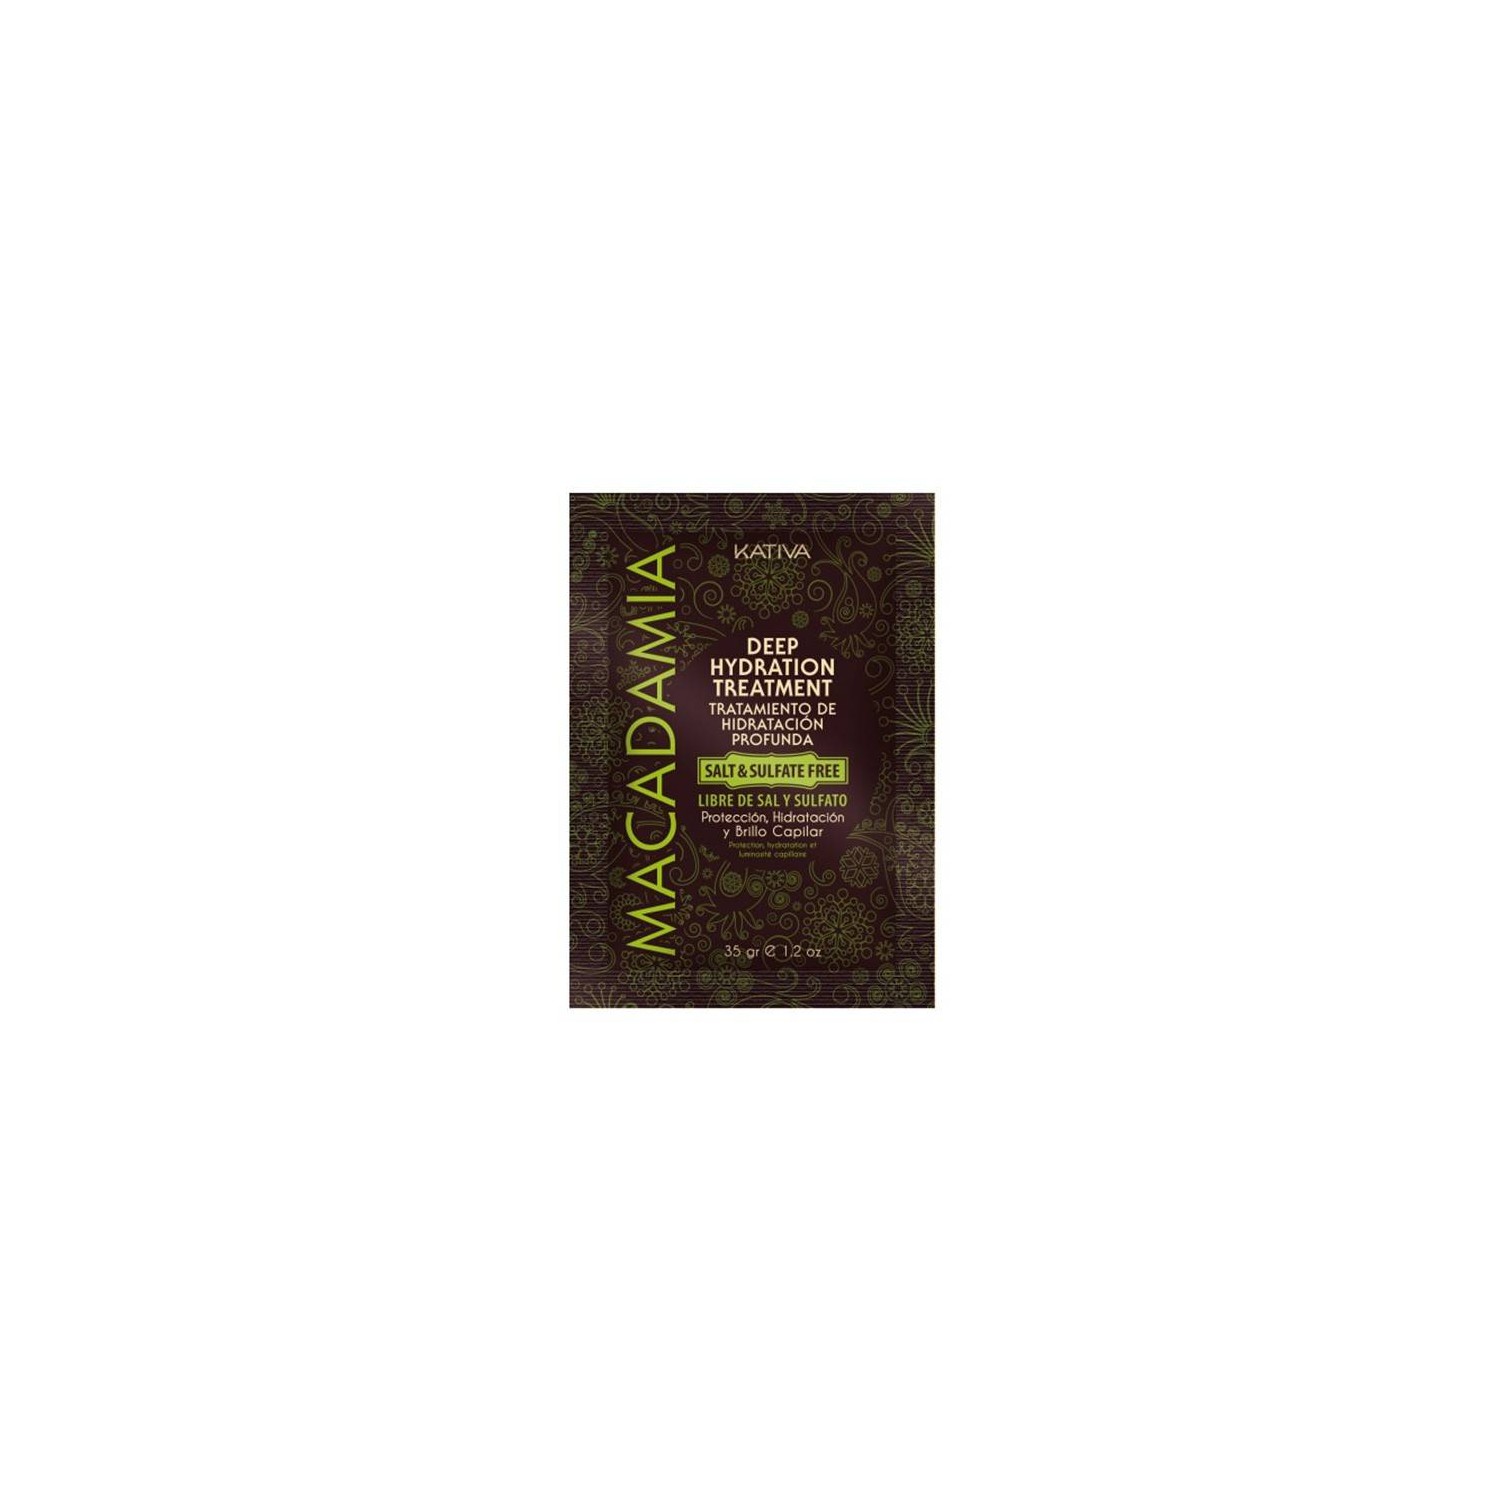 Kativa Macadamia Deep Traitement Hydratant (12 Units) 12x35g  